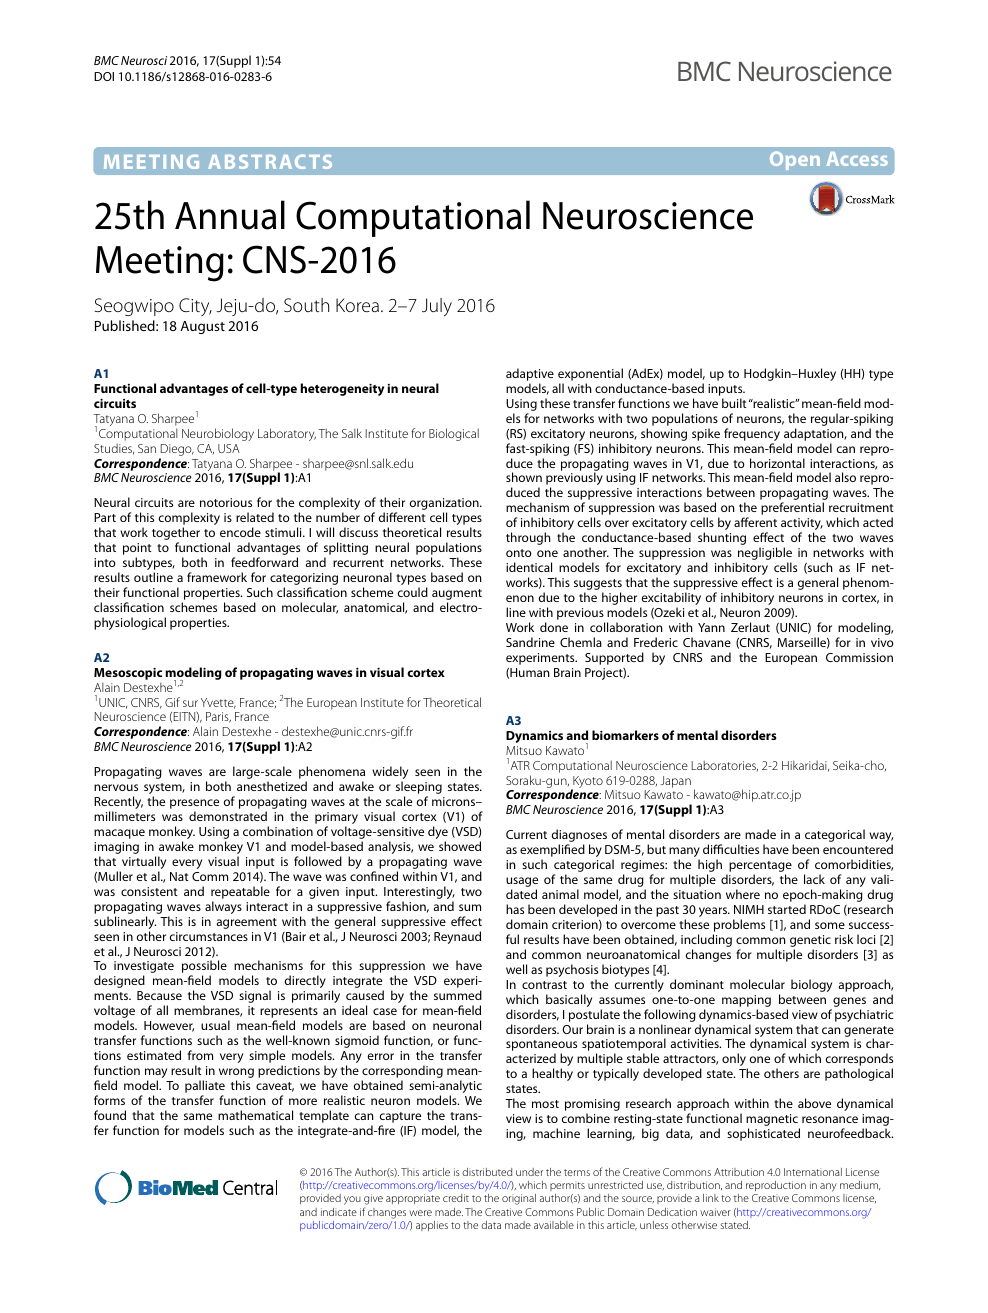 25th Annual Computational Neuroscience Meeting Cns 2016 Topic